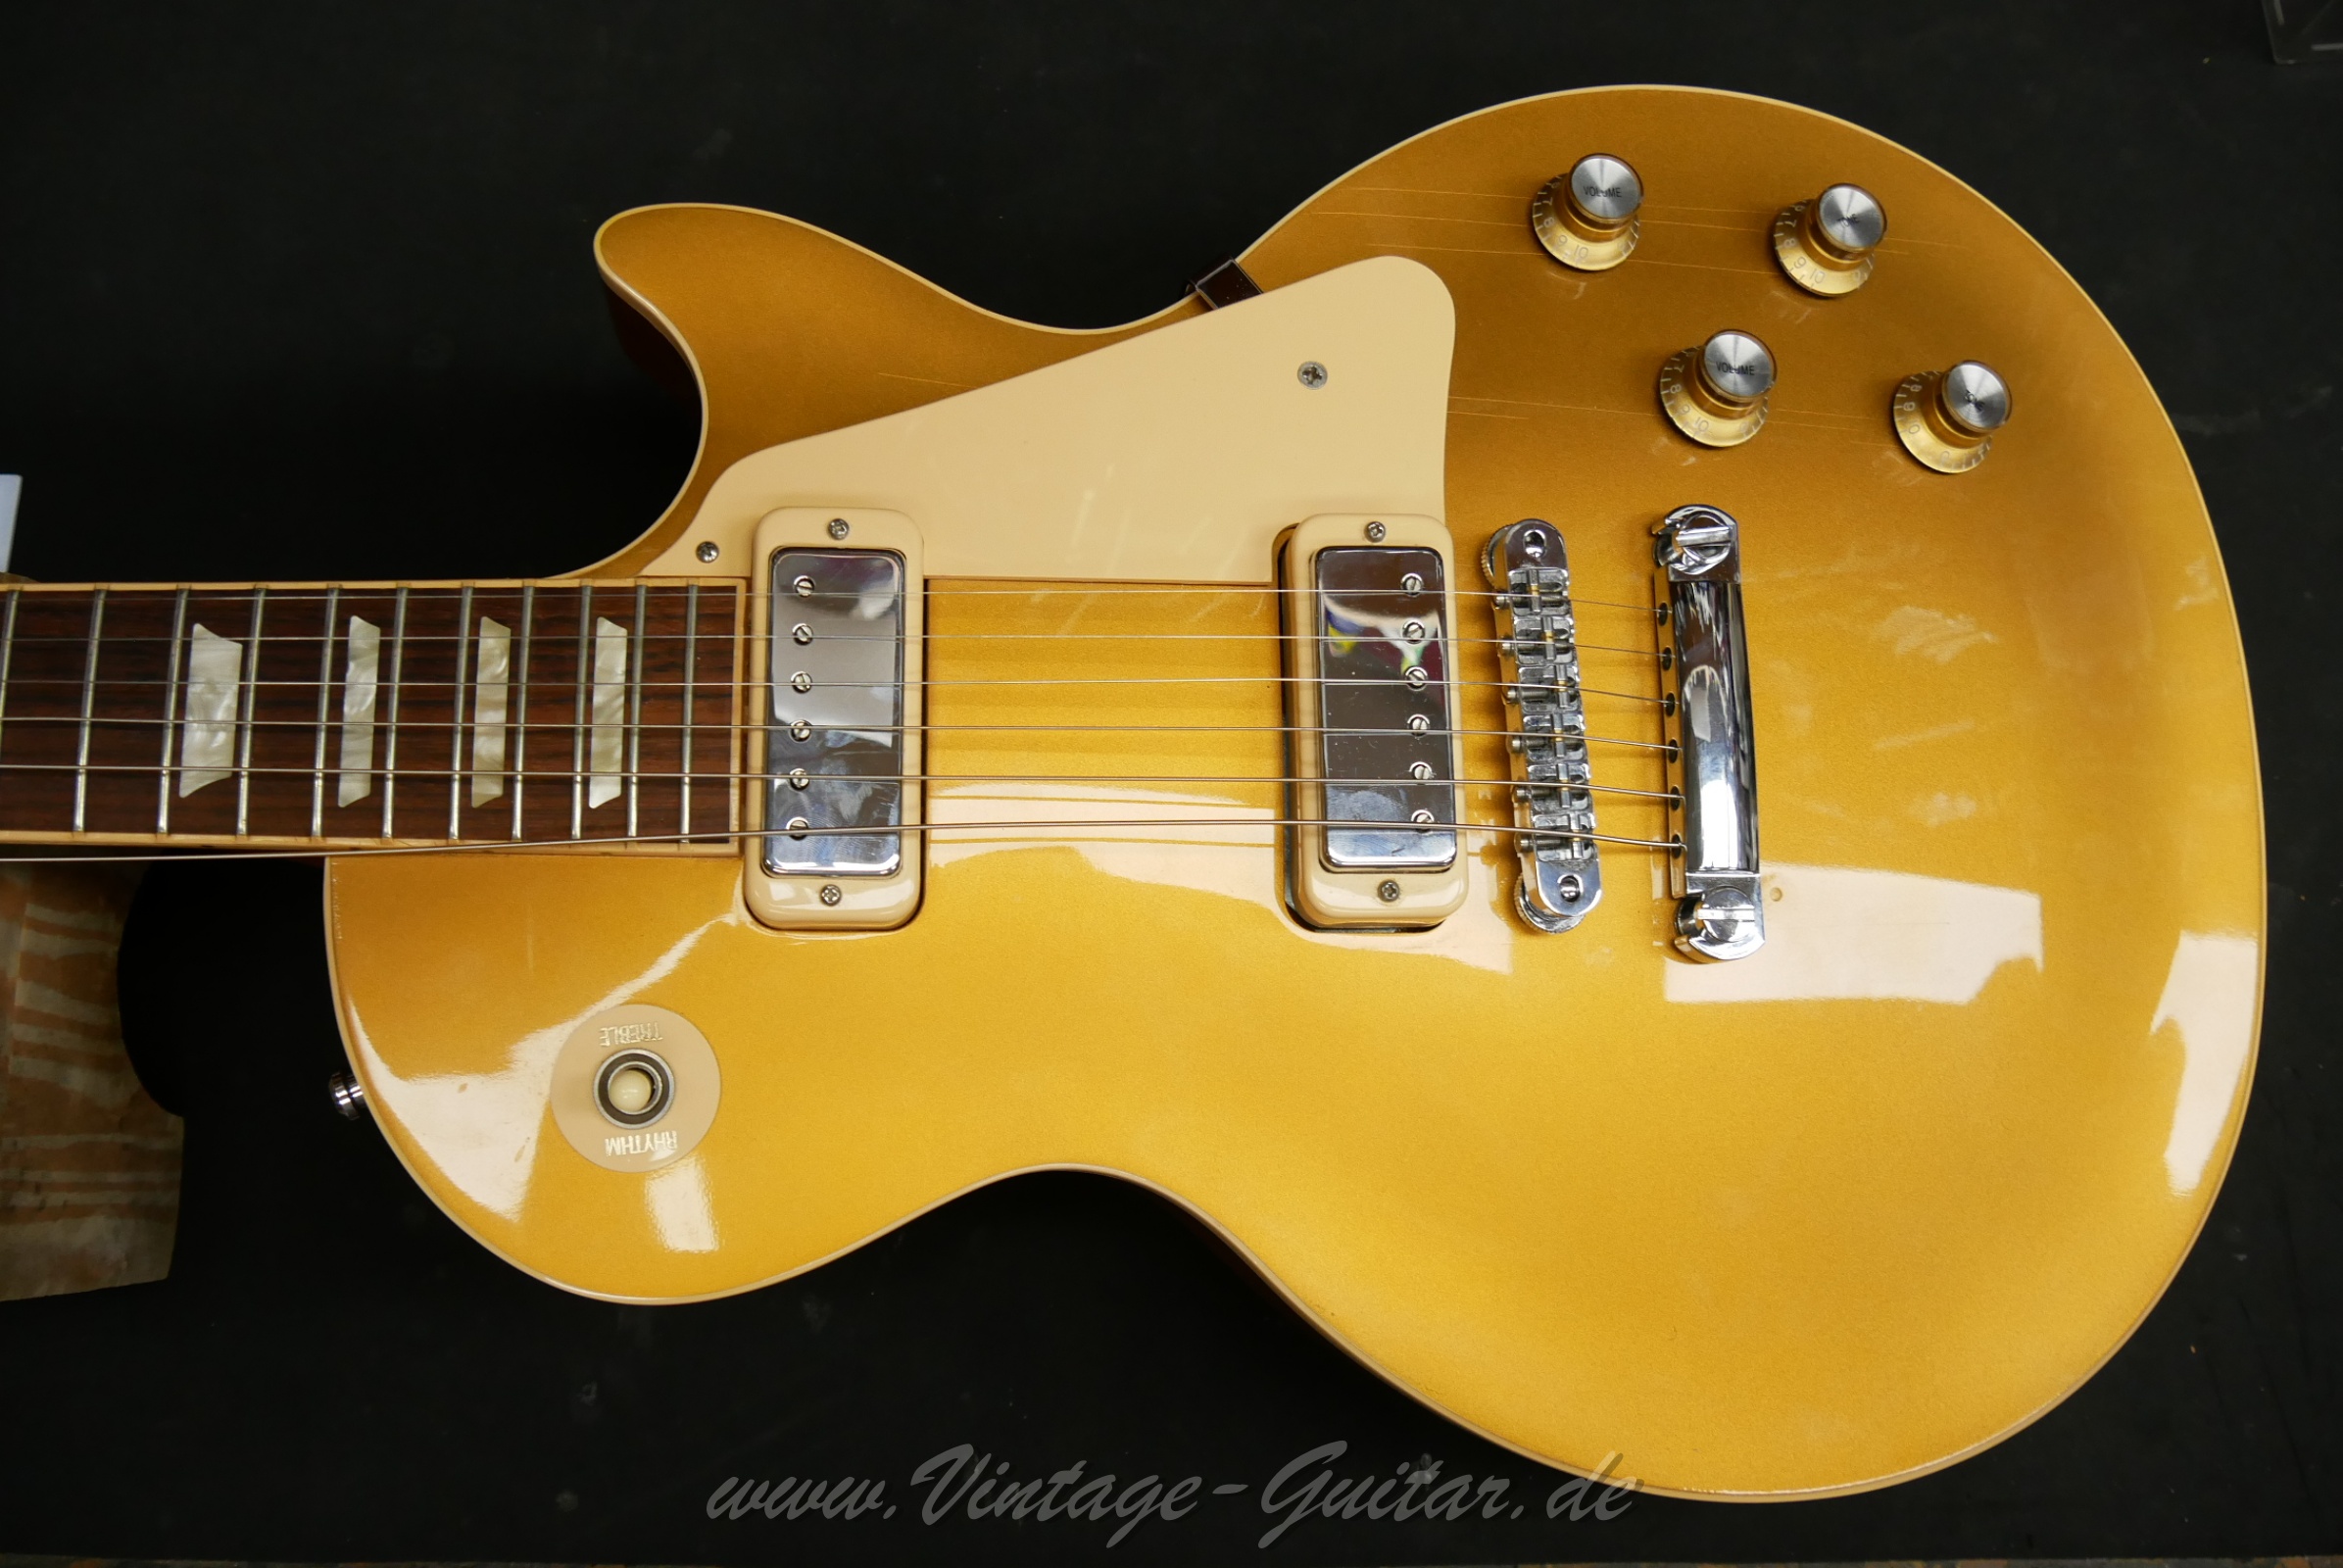 Gibson_Les_Paul_Deluxe_goldtop_Baujahr_2011_USA-016.jpg